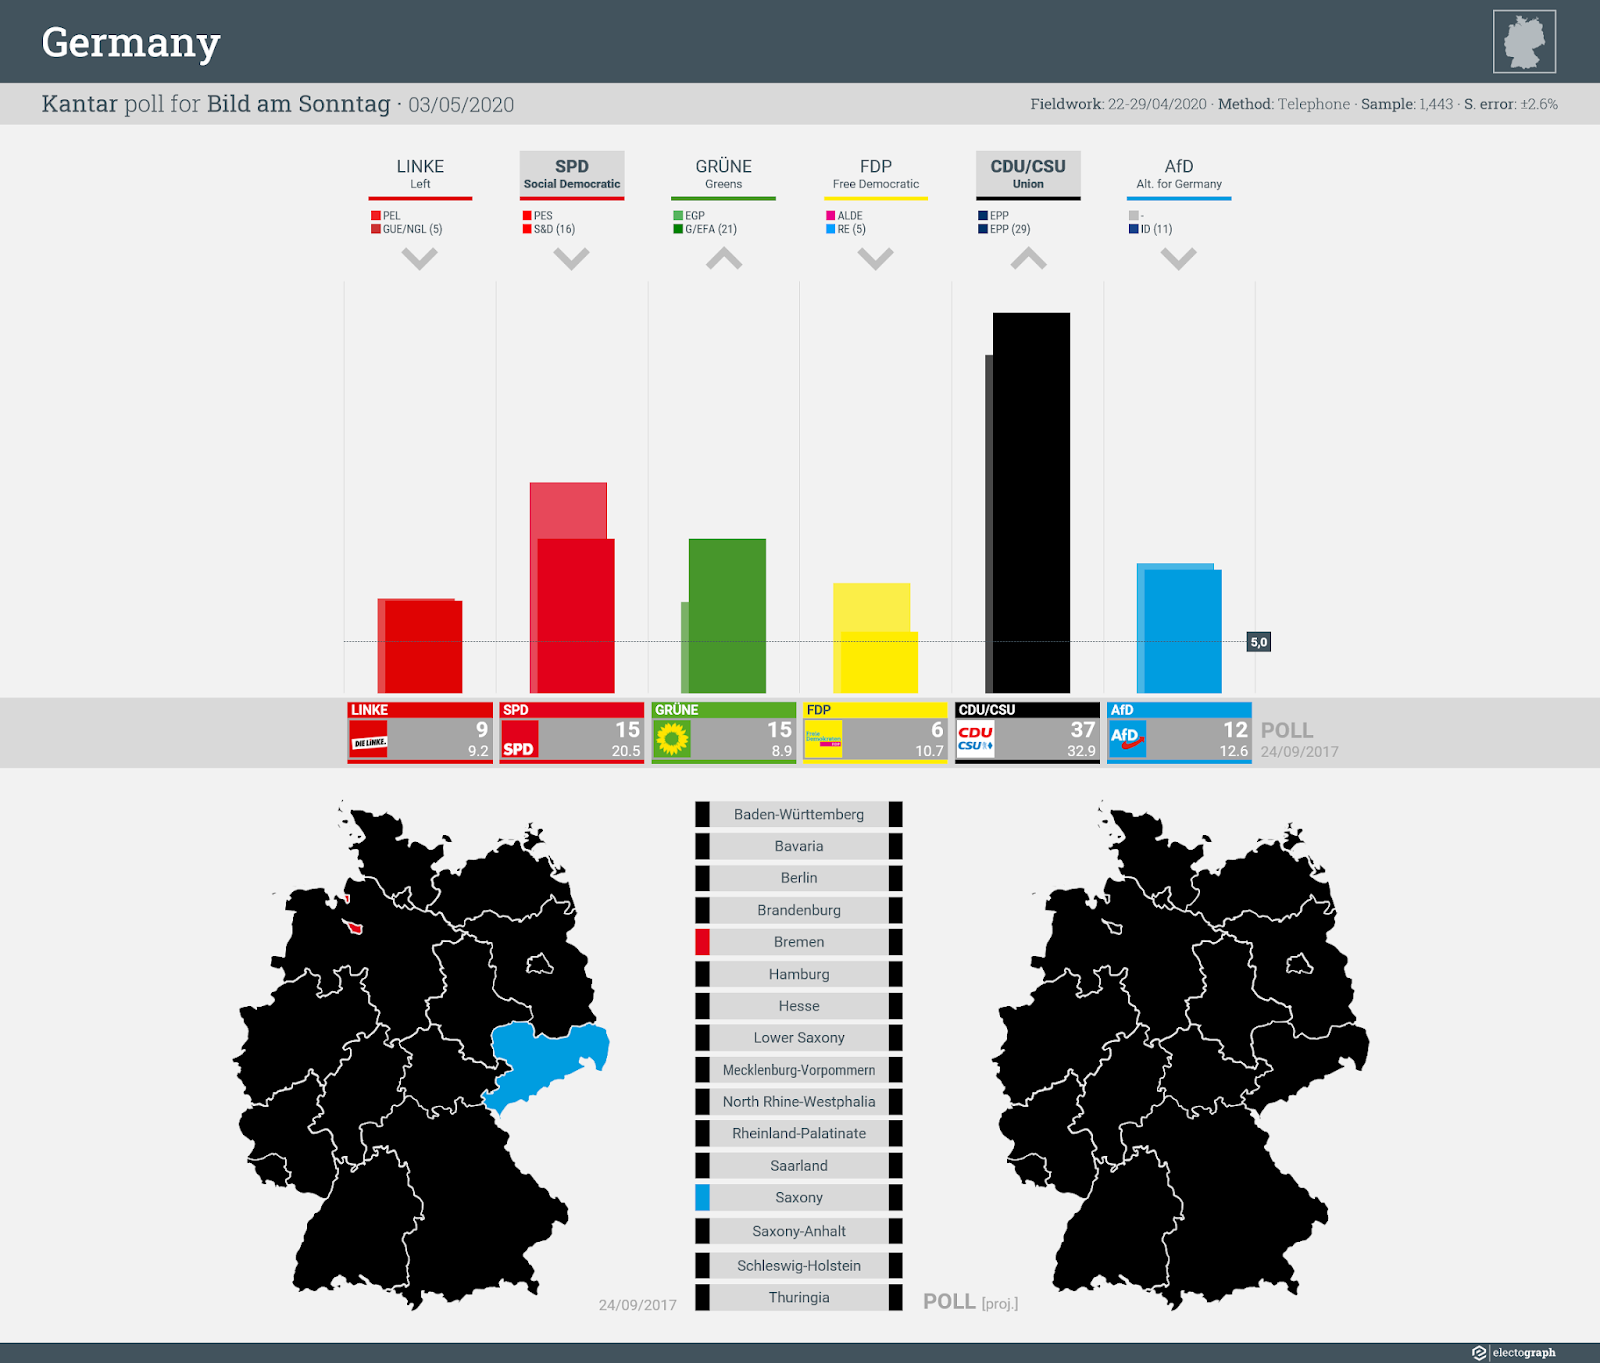 GERMANY: Kantar poll chart for Bild am Sonntag, 3 May 2020